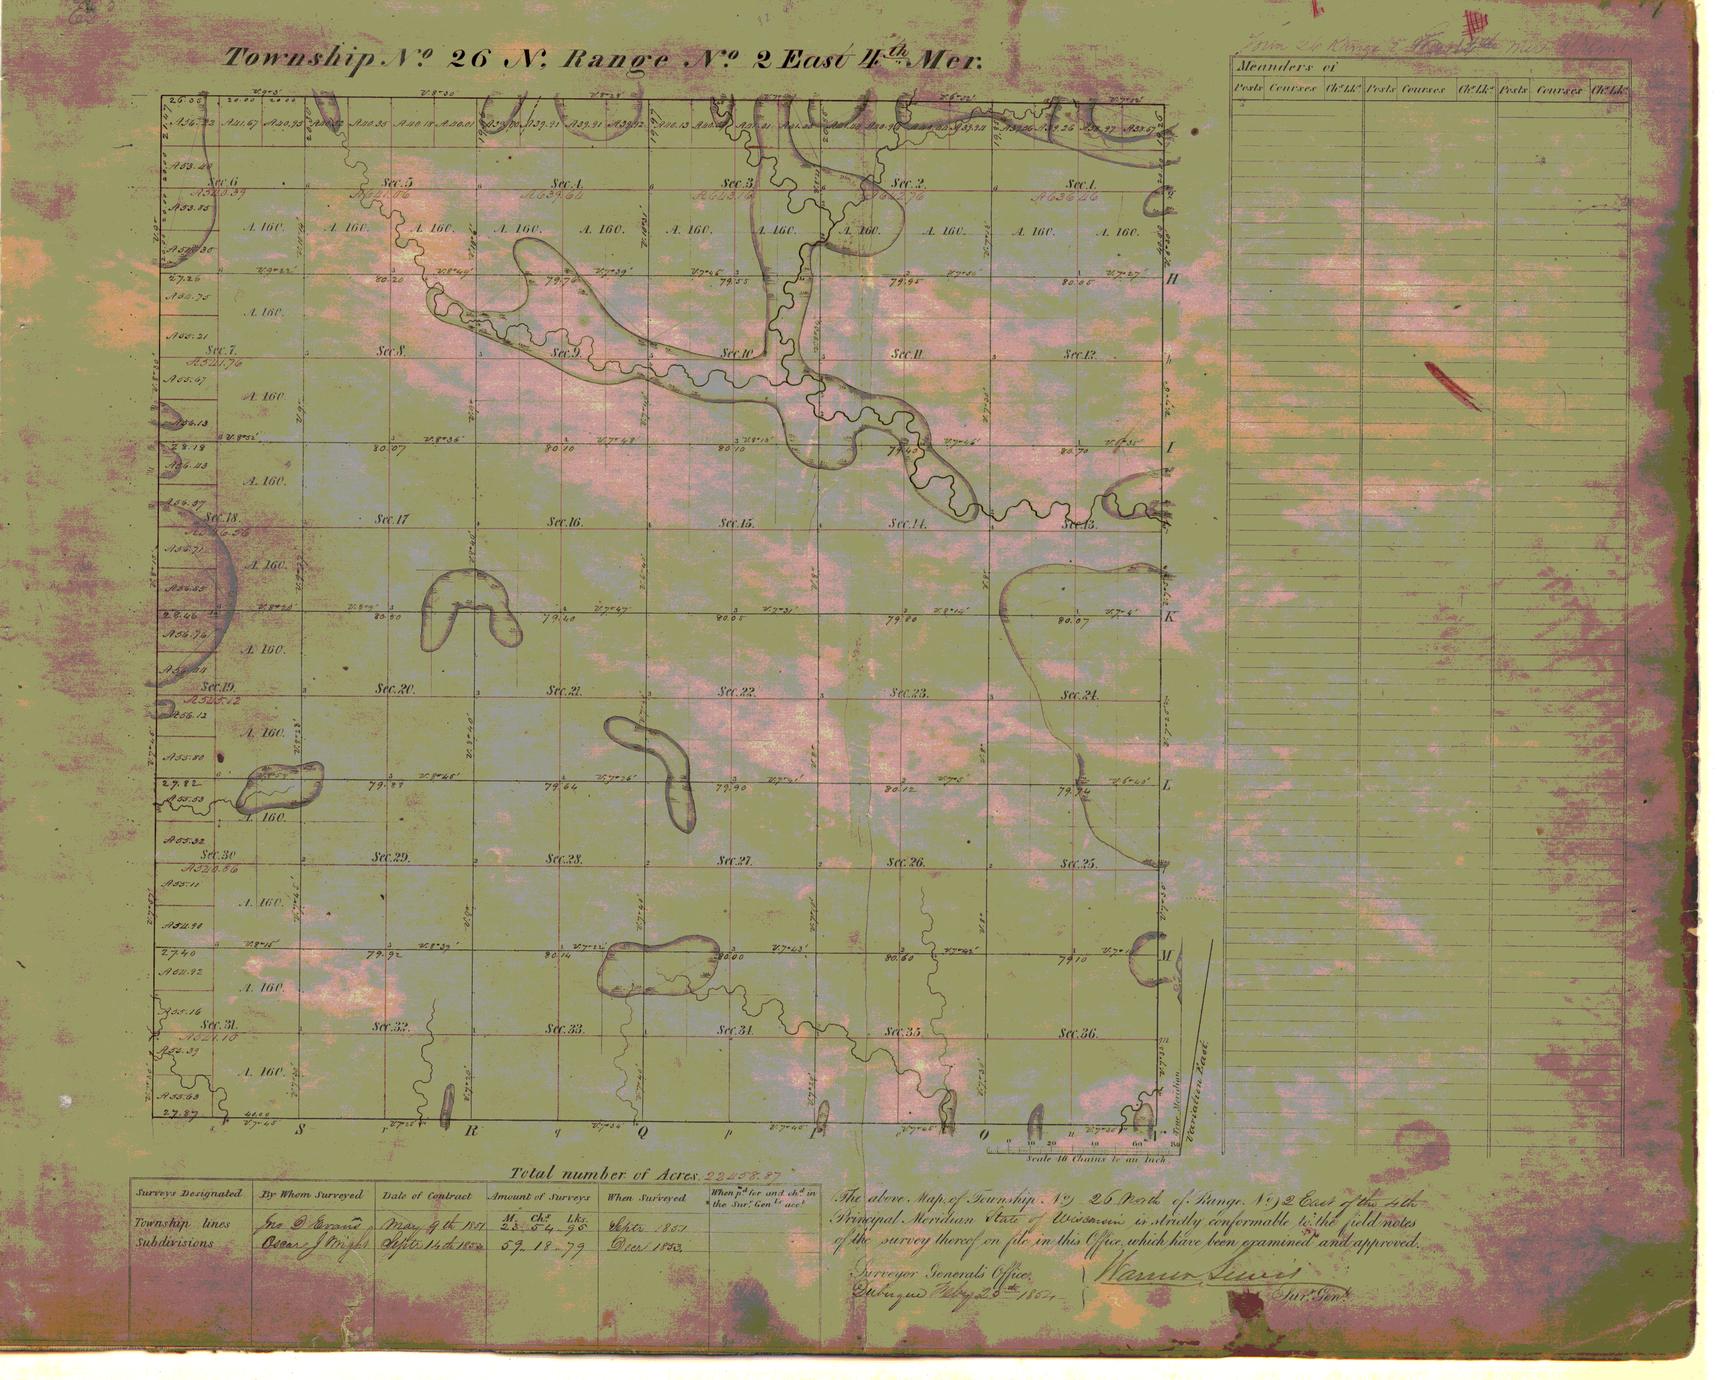 [Public Land Survey System map: Wisconsin Township 26 North, Range 02 East]